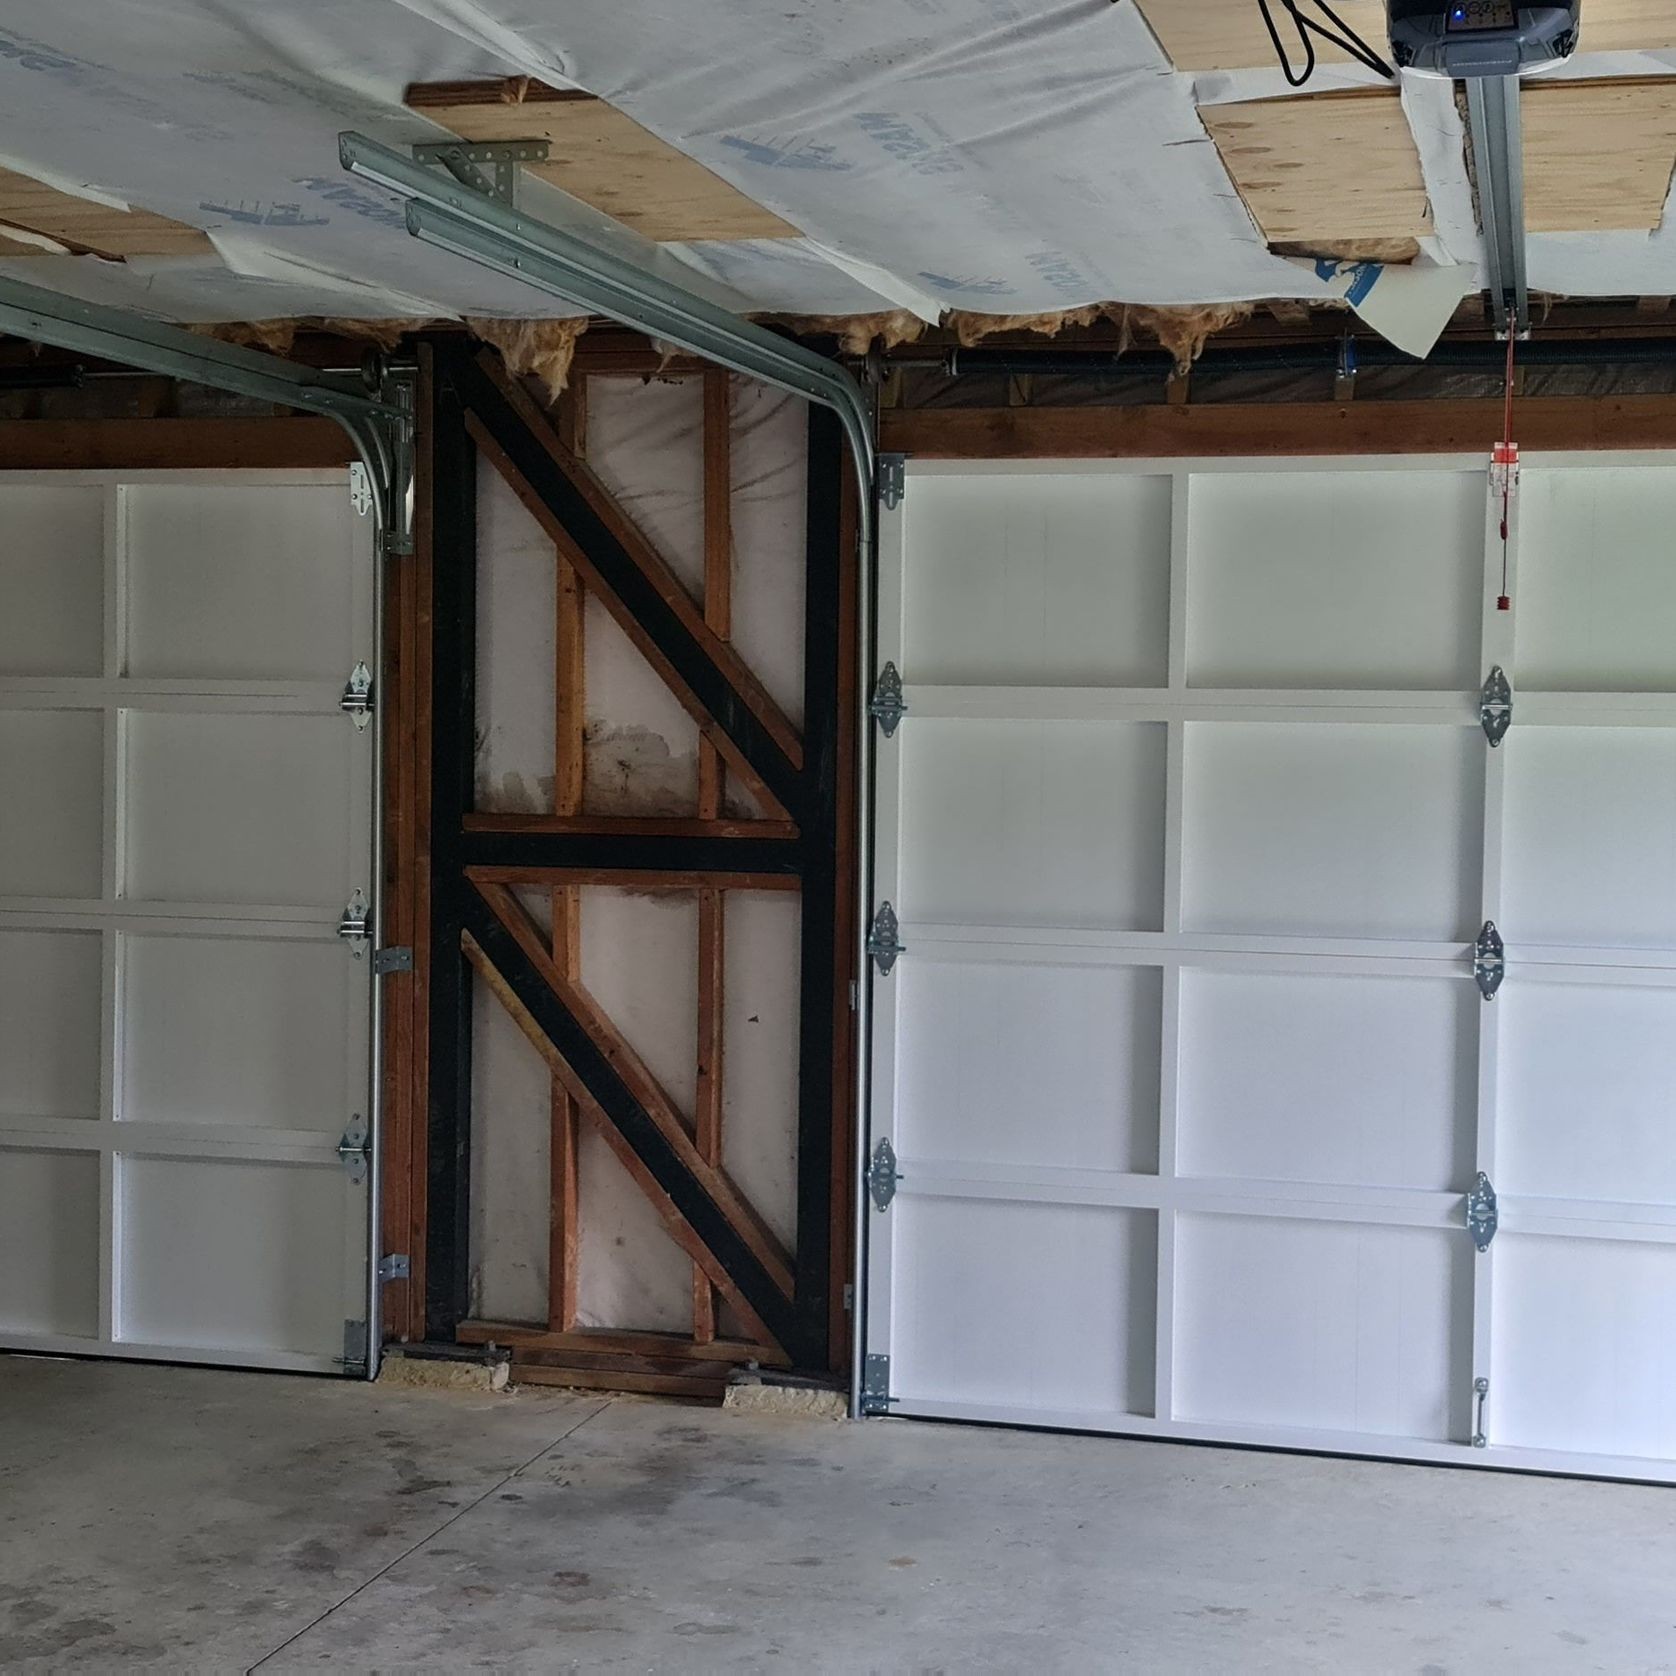 Aluminium Craftsman Garage Door gallery detail image